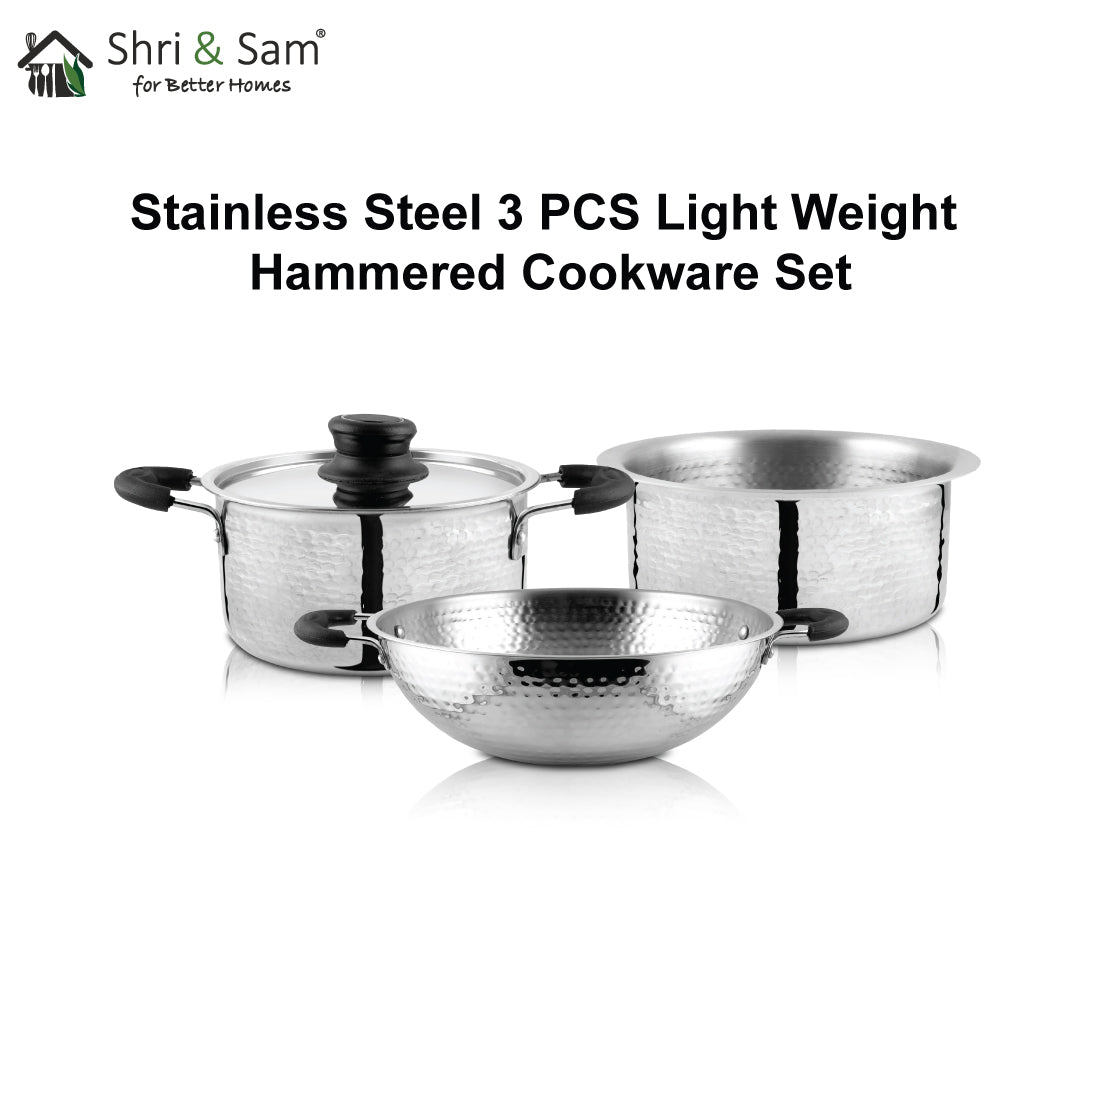 Stainless Steel 3 PCS Light Weight Hammered Cookware Set